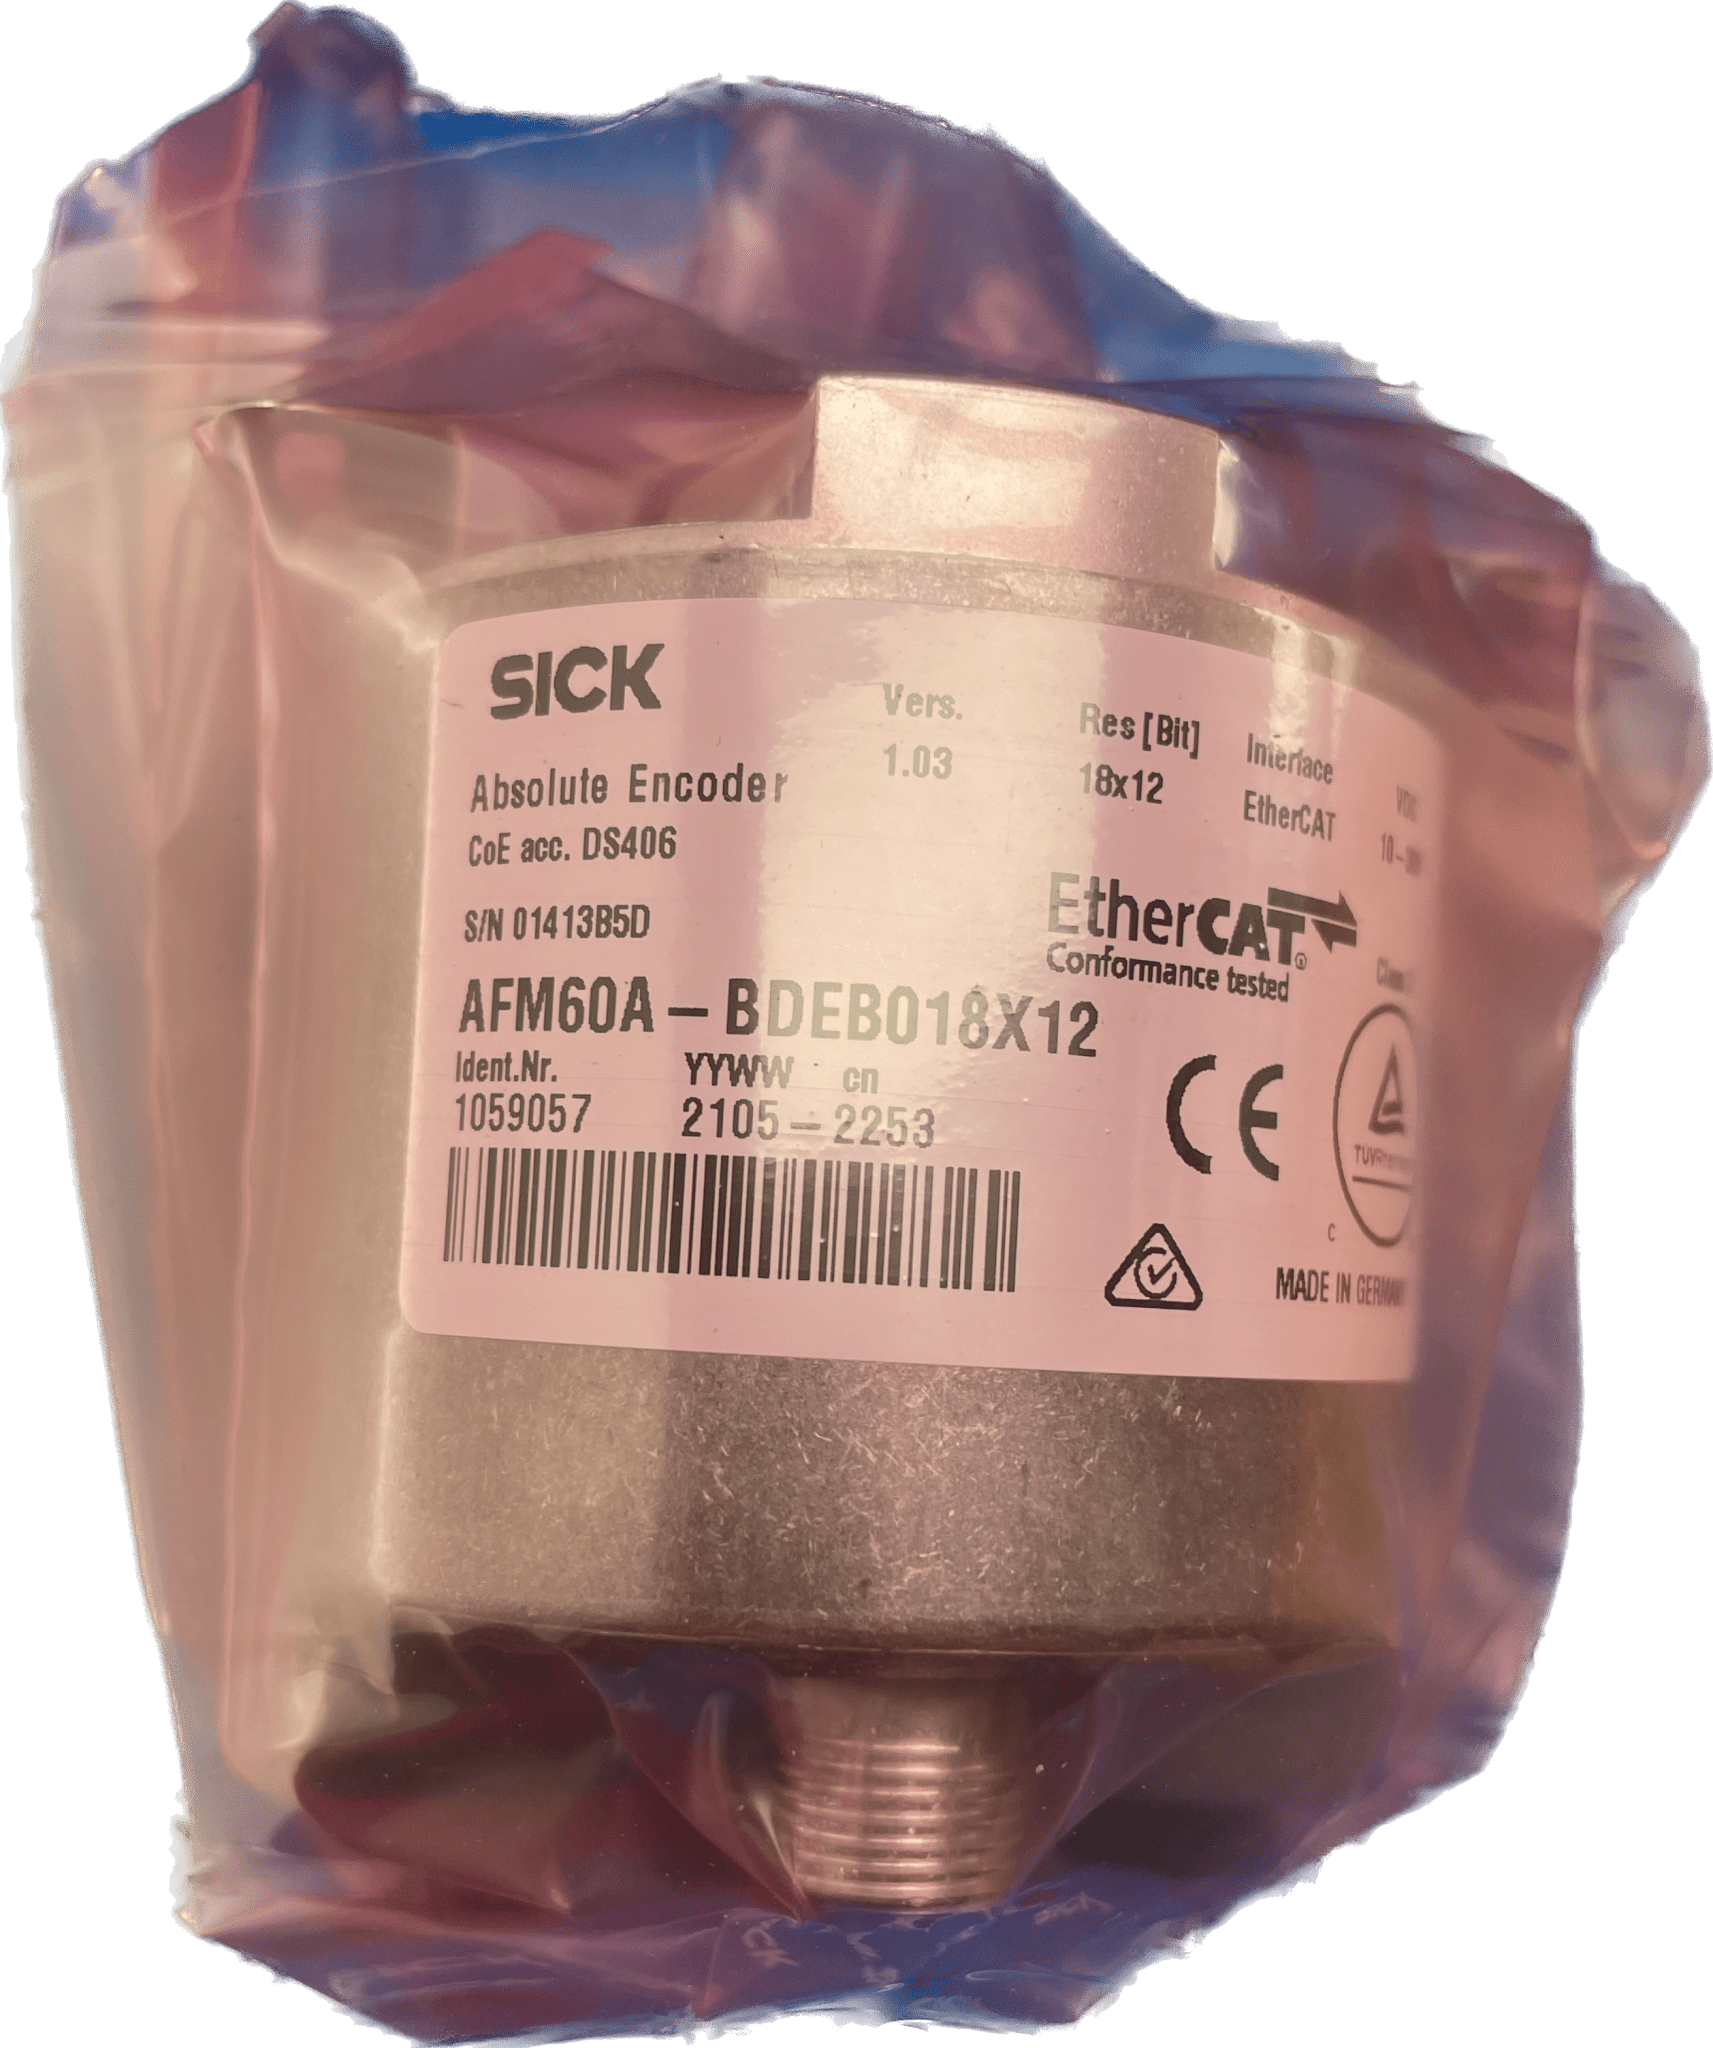 Sick AFM60A-BDEB018x12 - #product_category# | Klenk Maschinenhandel